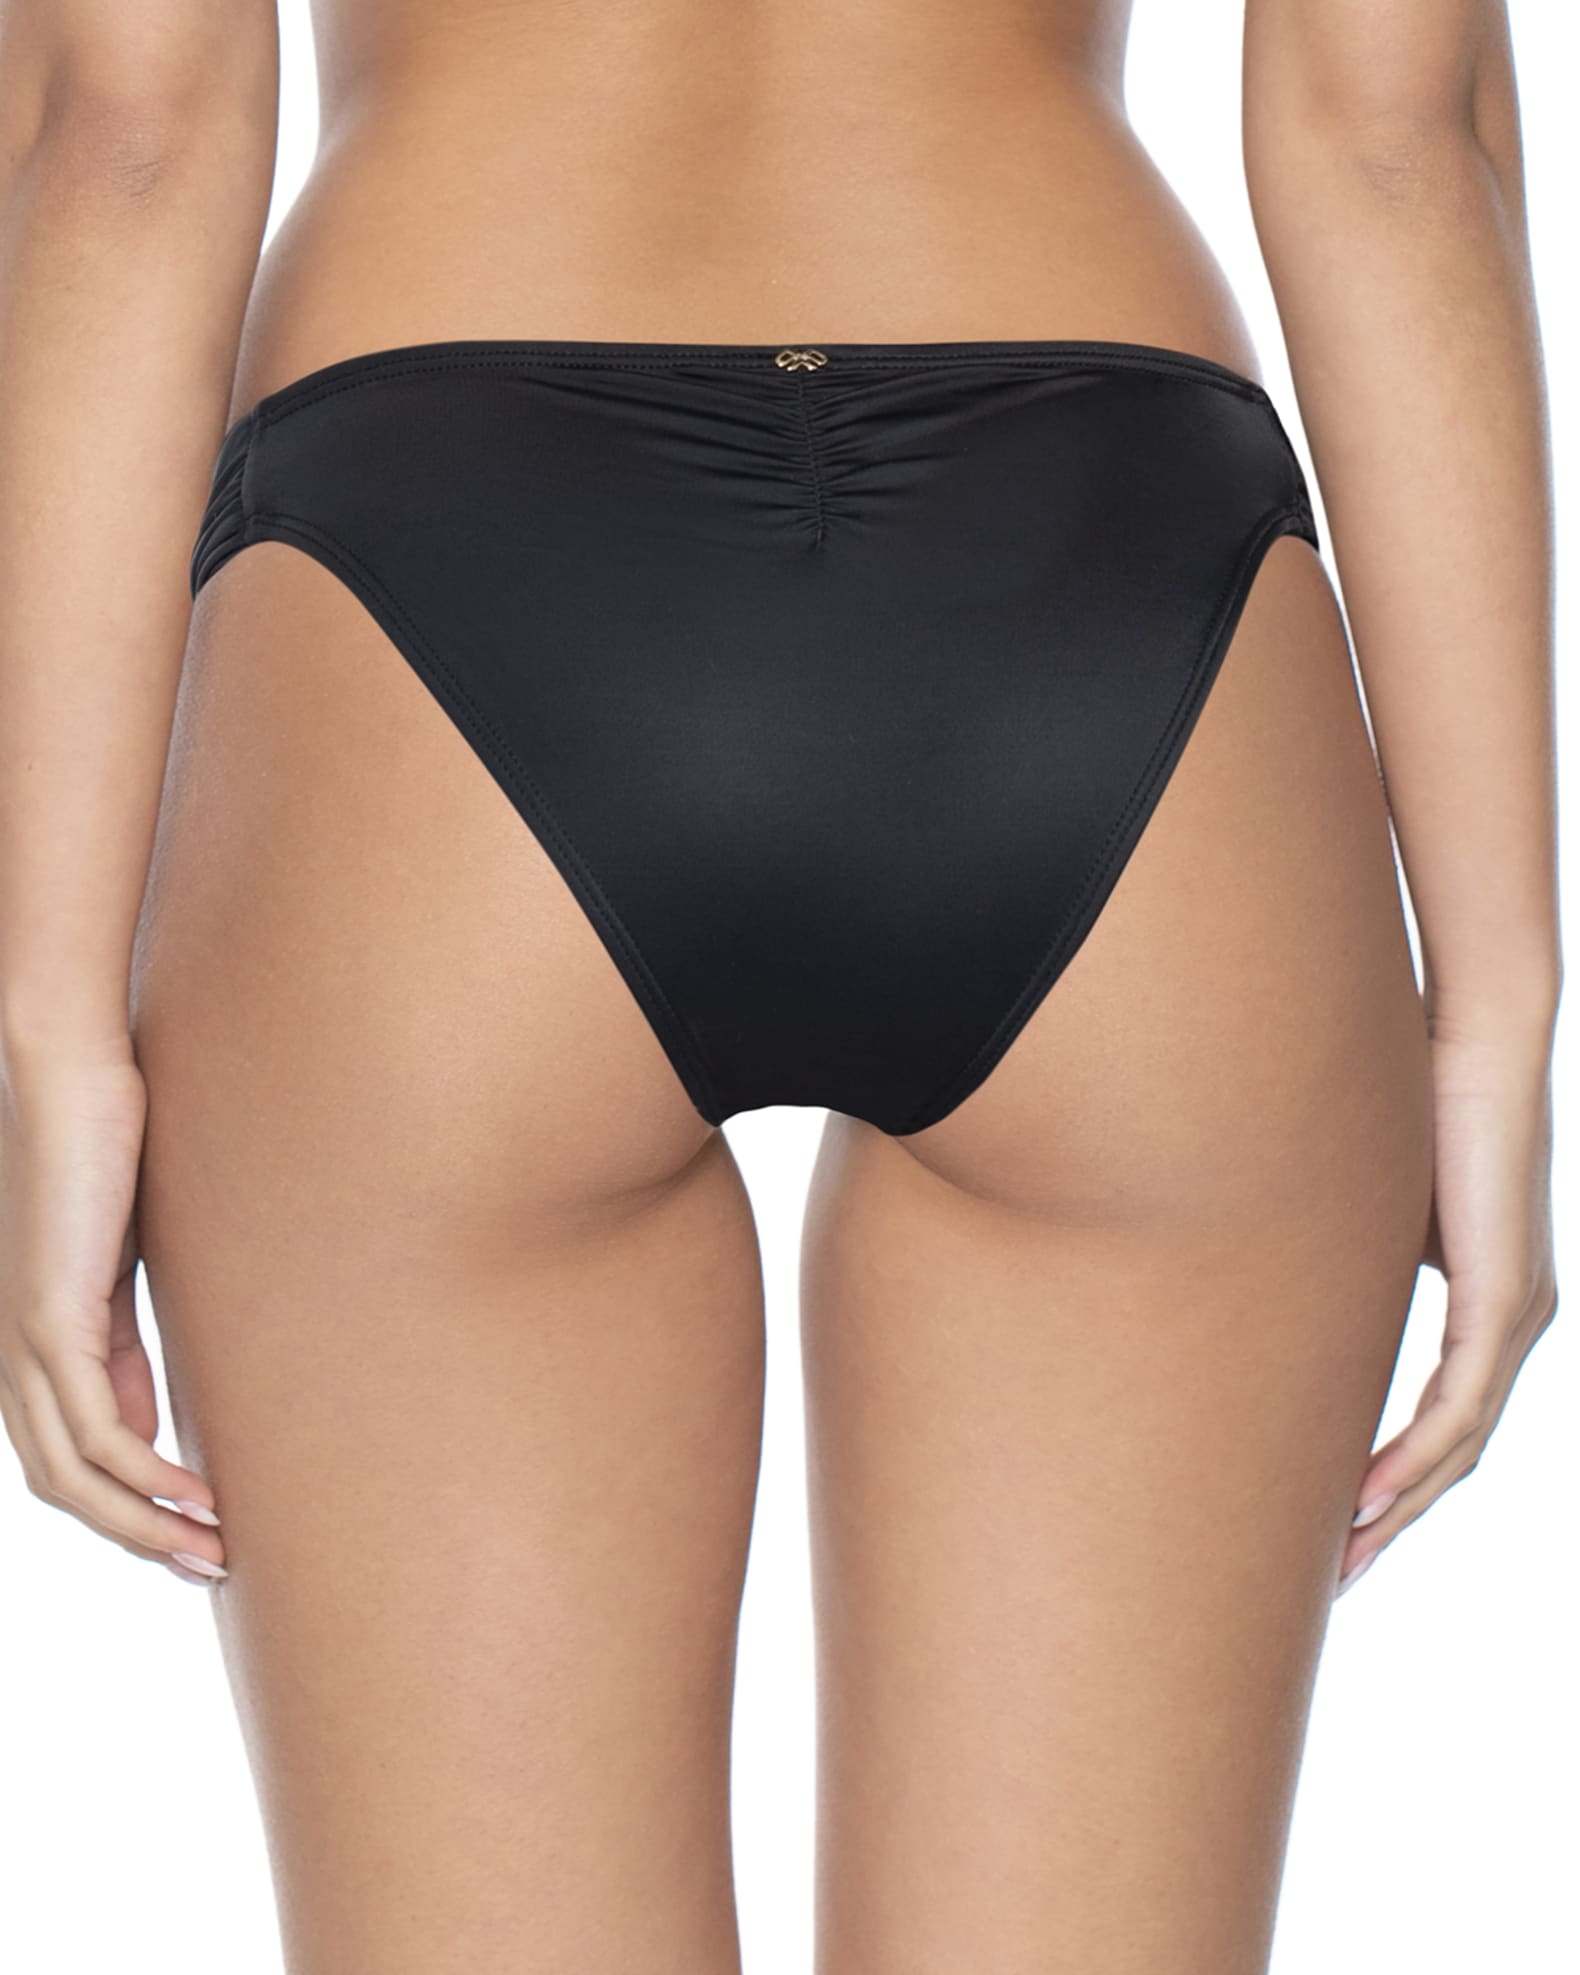  PQ Swim Women's Midnight Lace Fanned Bikini Bottoms